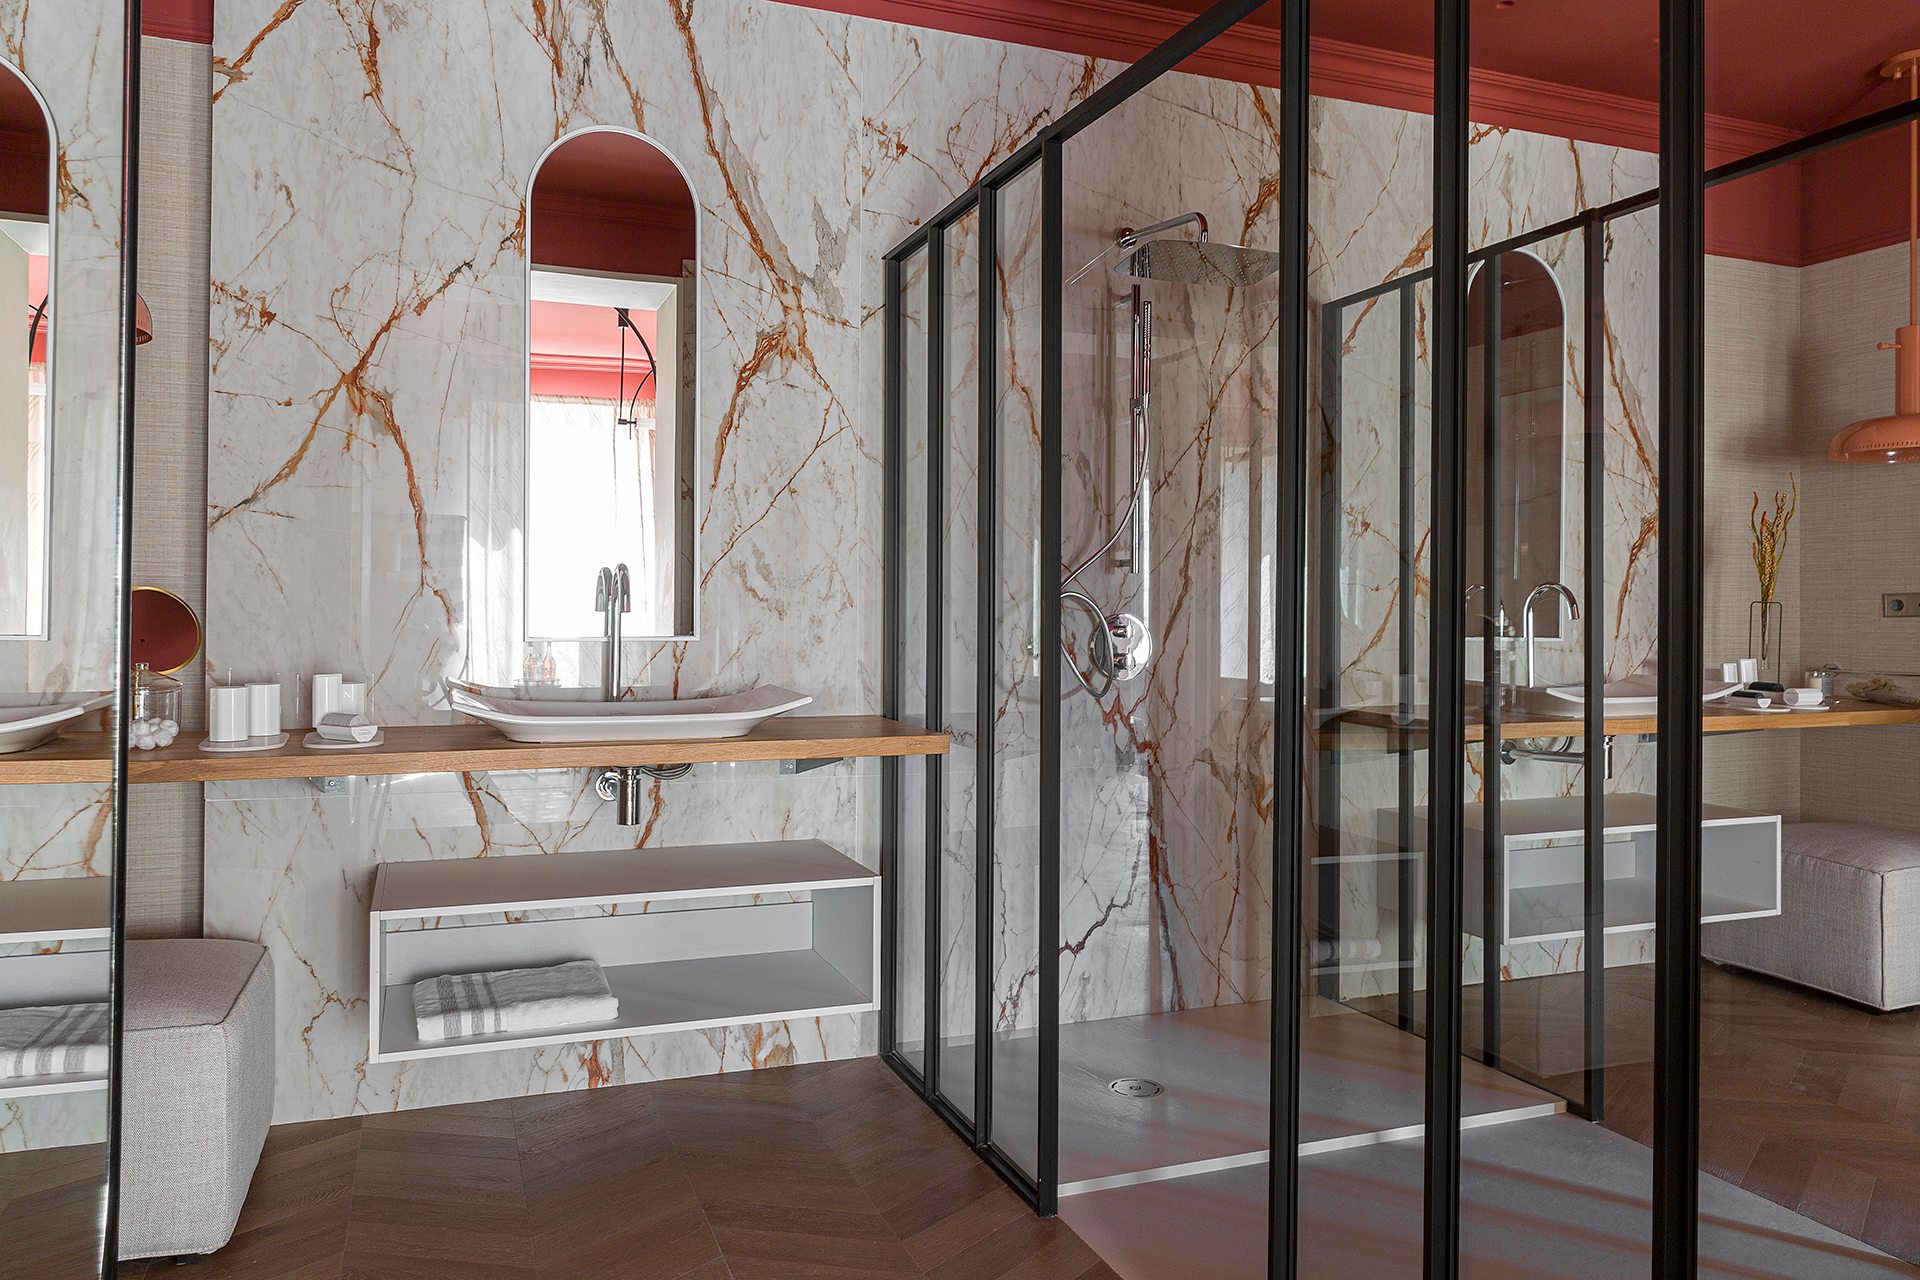 Image of 13. Bajas casa decor 2022 espacio jacob delafon u interior design cuarto de bano09 in A journey to the best of Art Deco Paris through a bathroom - Cosentino